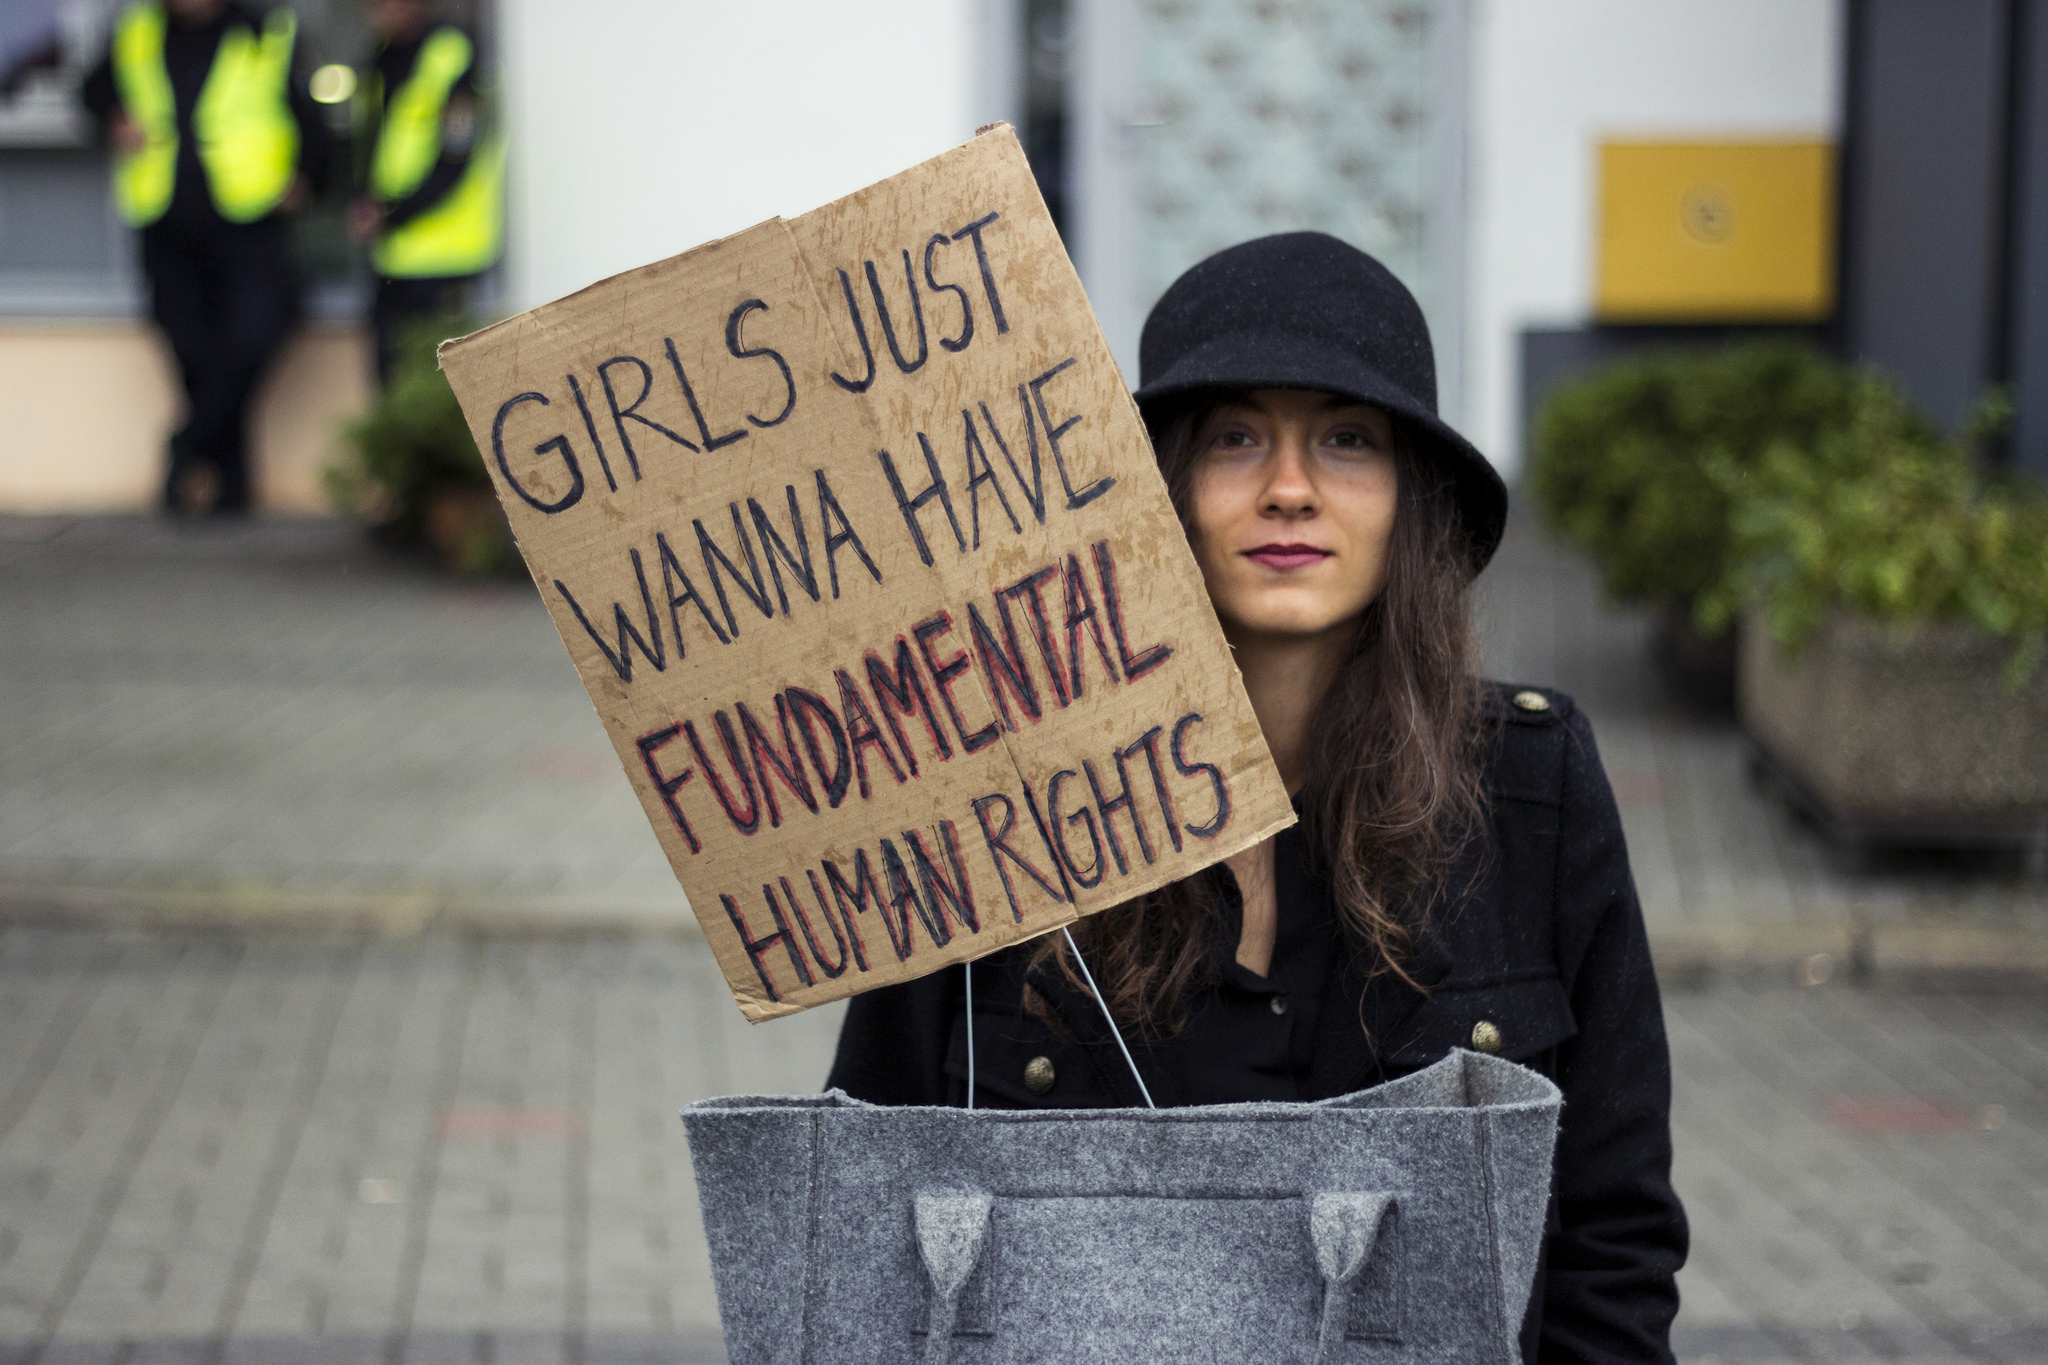 Girls Just Wanna Have Fundamental Human Rights sign